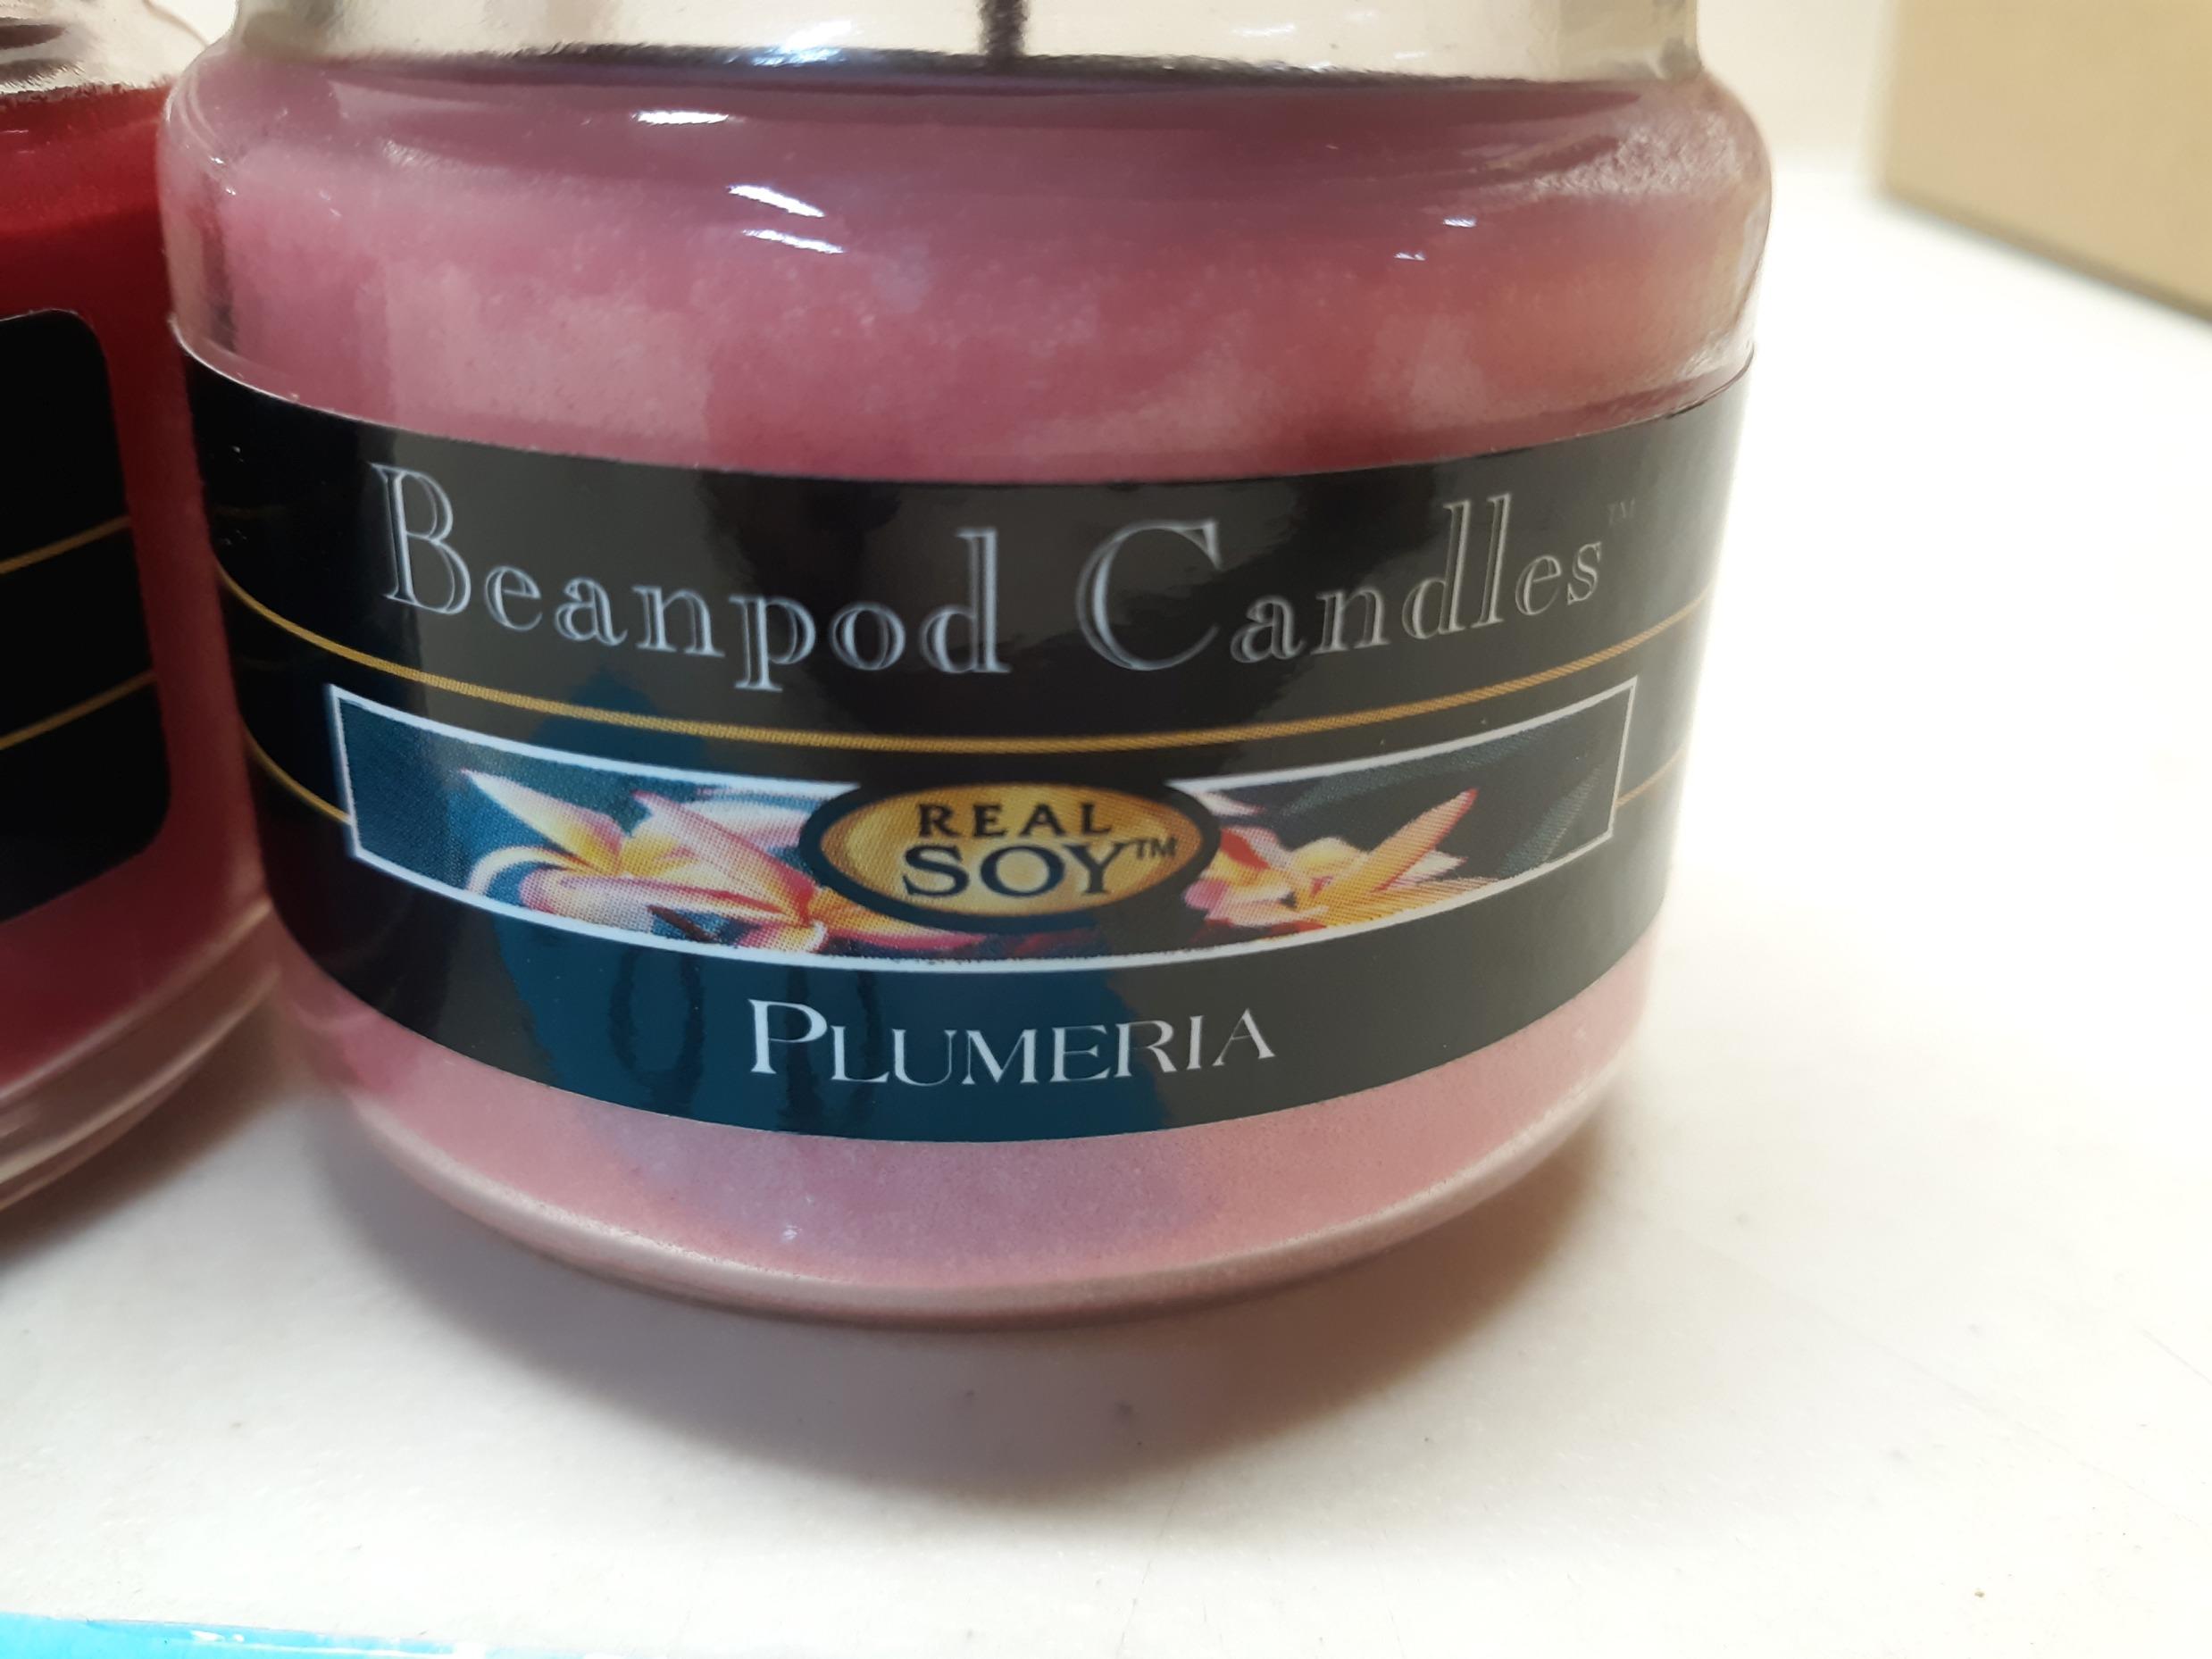 Beanpod Soy Candles, Cranberry Clove, Plumeria